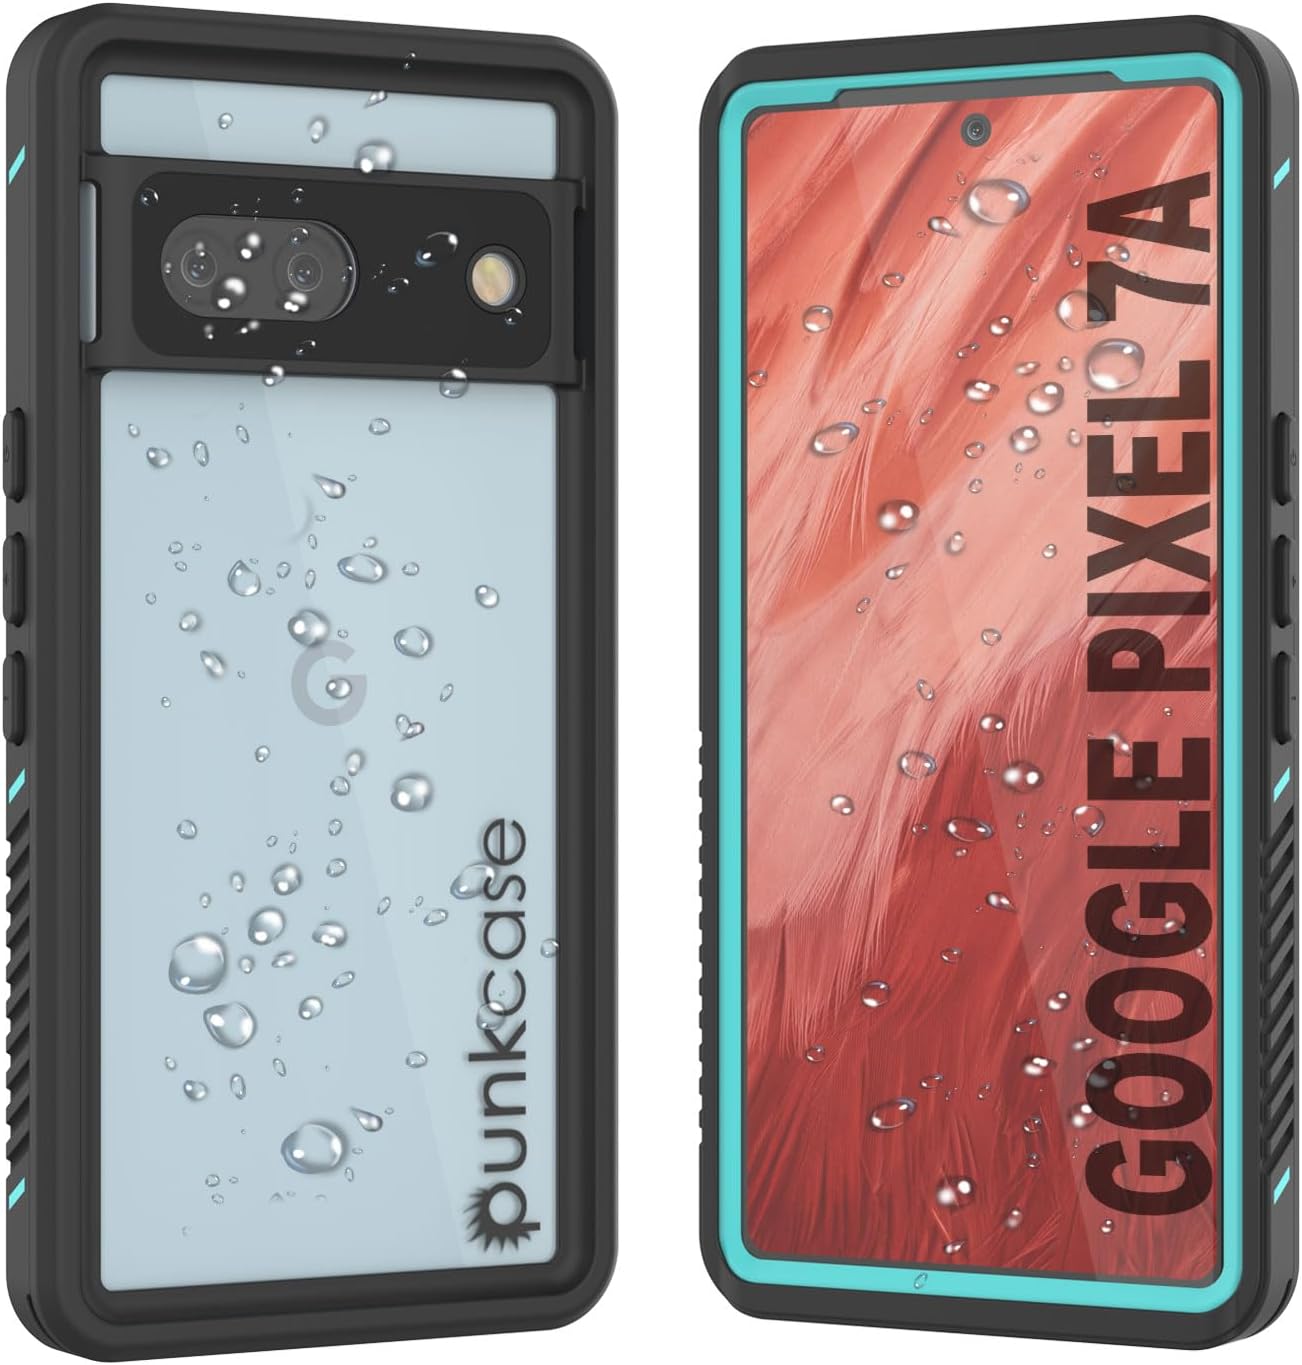 Google Pixel 7a Waterproof IP68 Case, Punkcase [Teal] [Extreme Series] –  punkcase